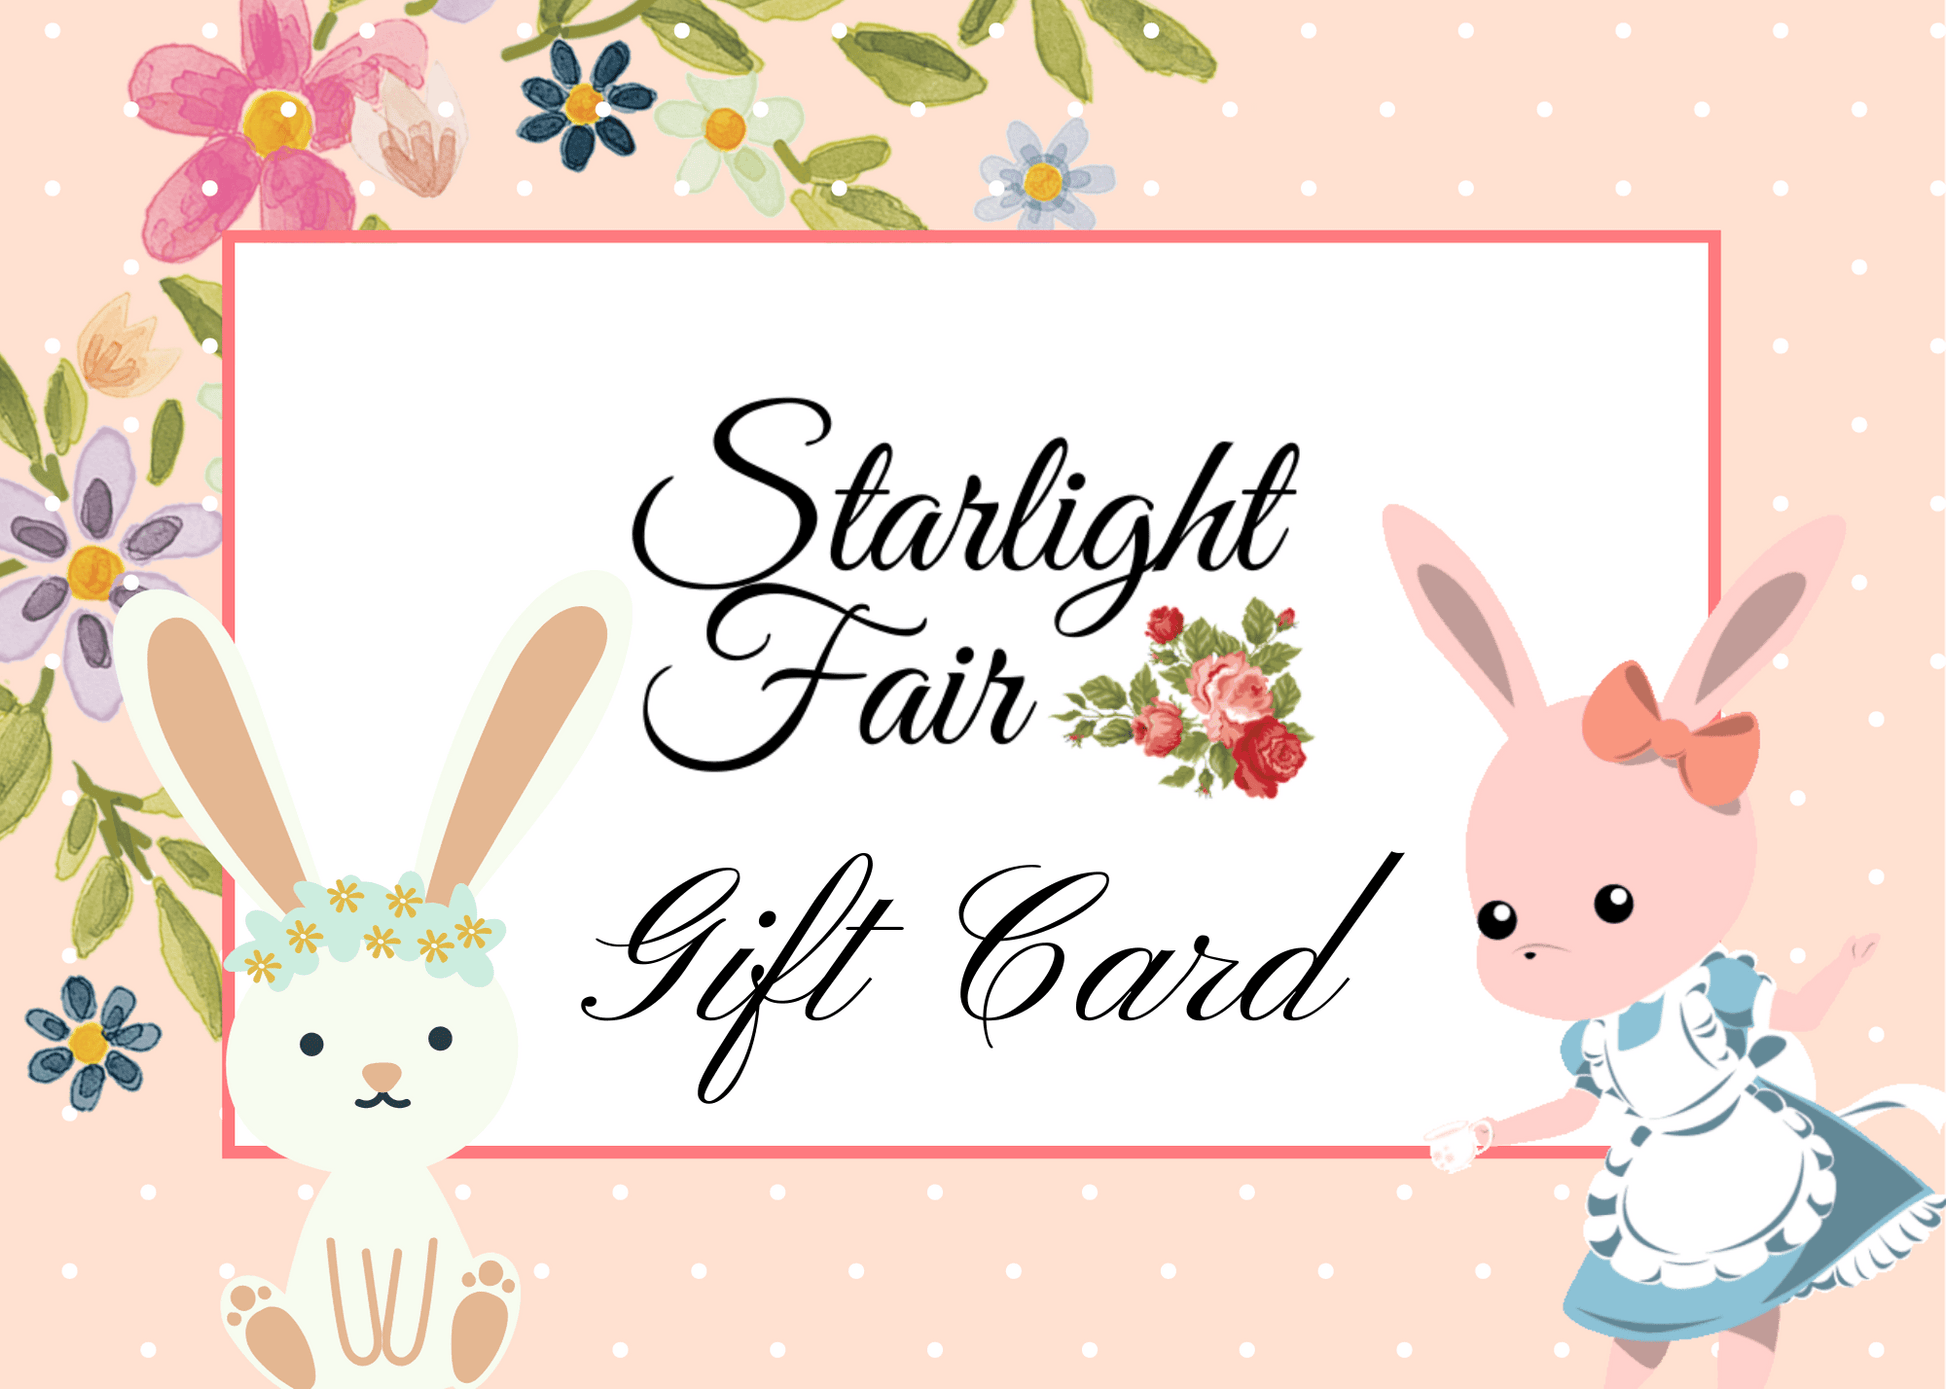 Gift Card - Starlight Fair